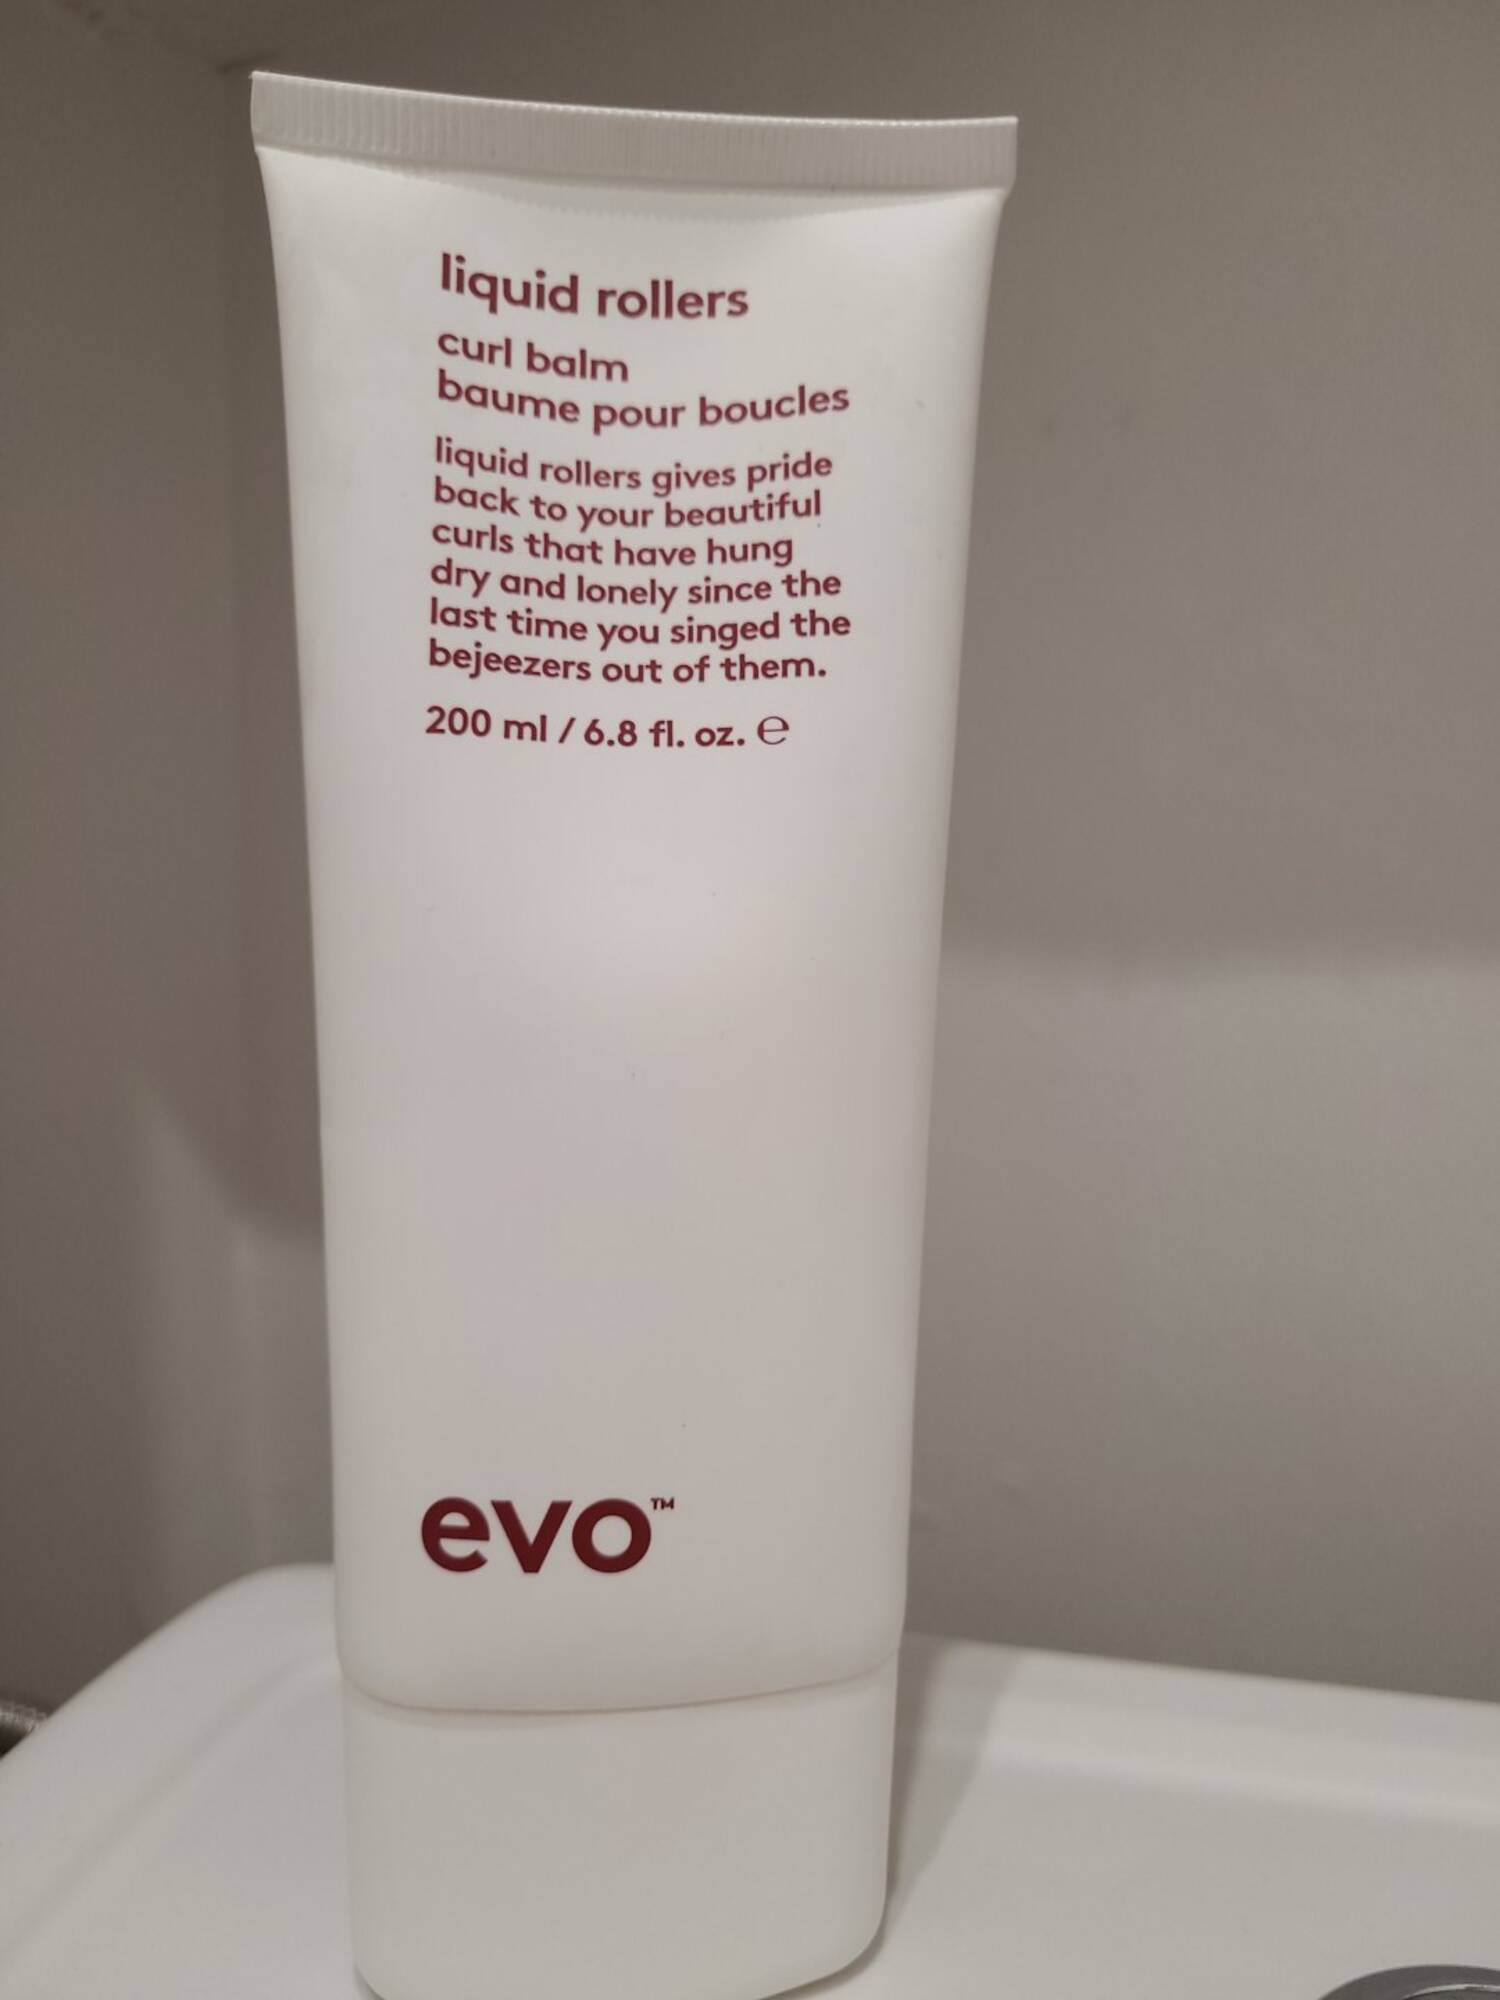 EVO - Liquid rollers - Baume pour boucles